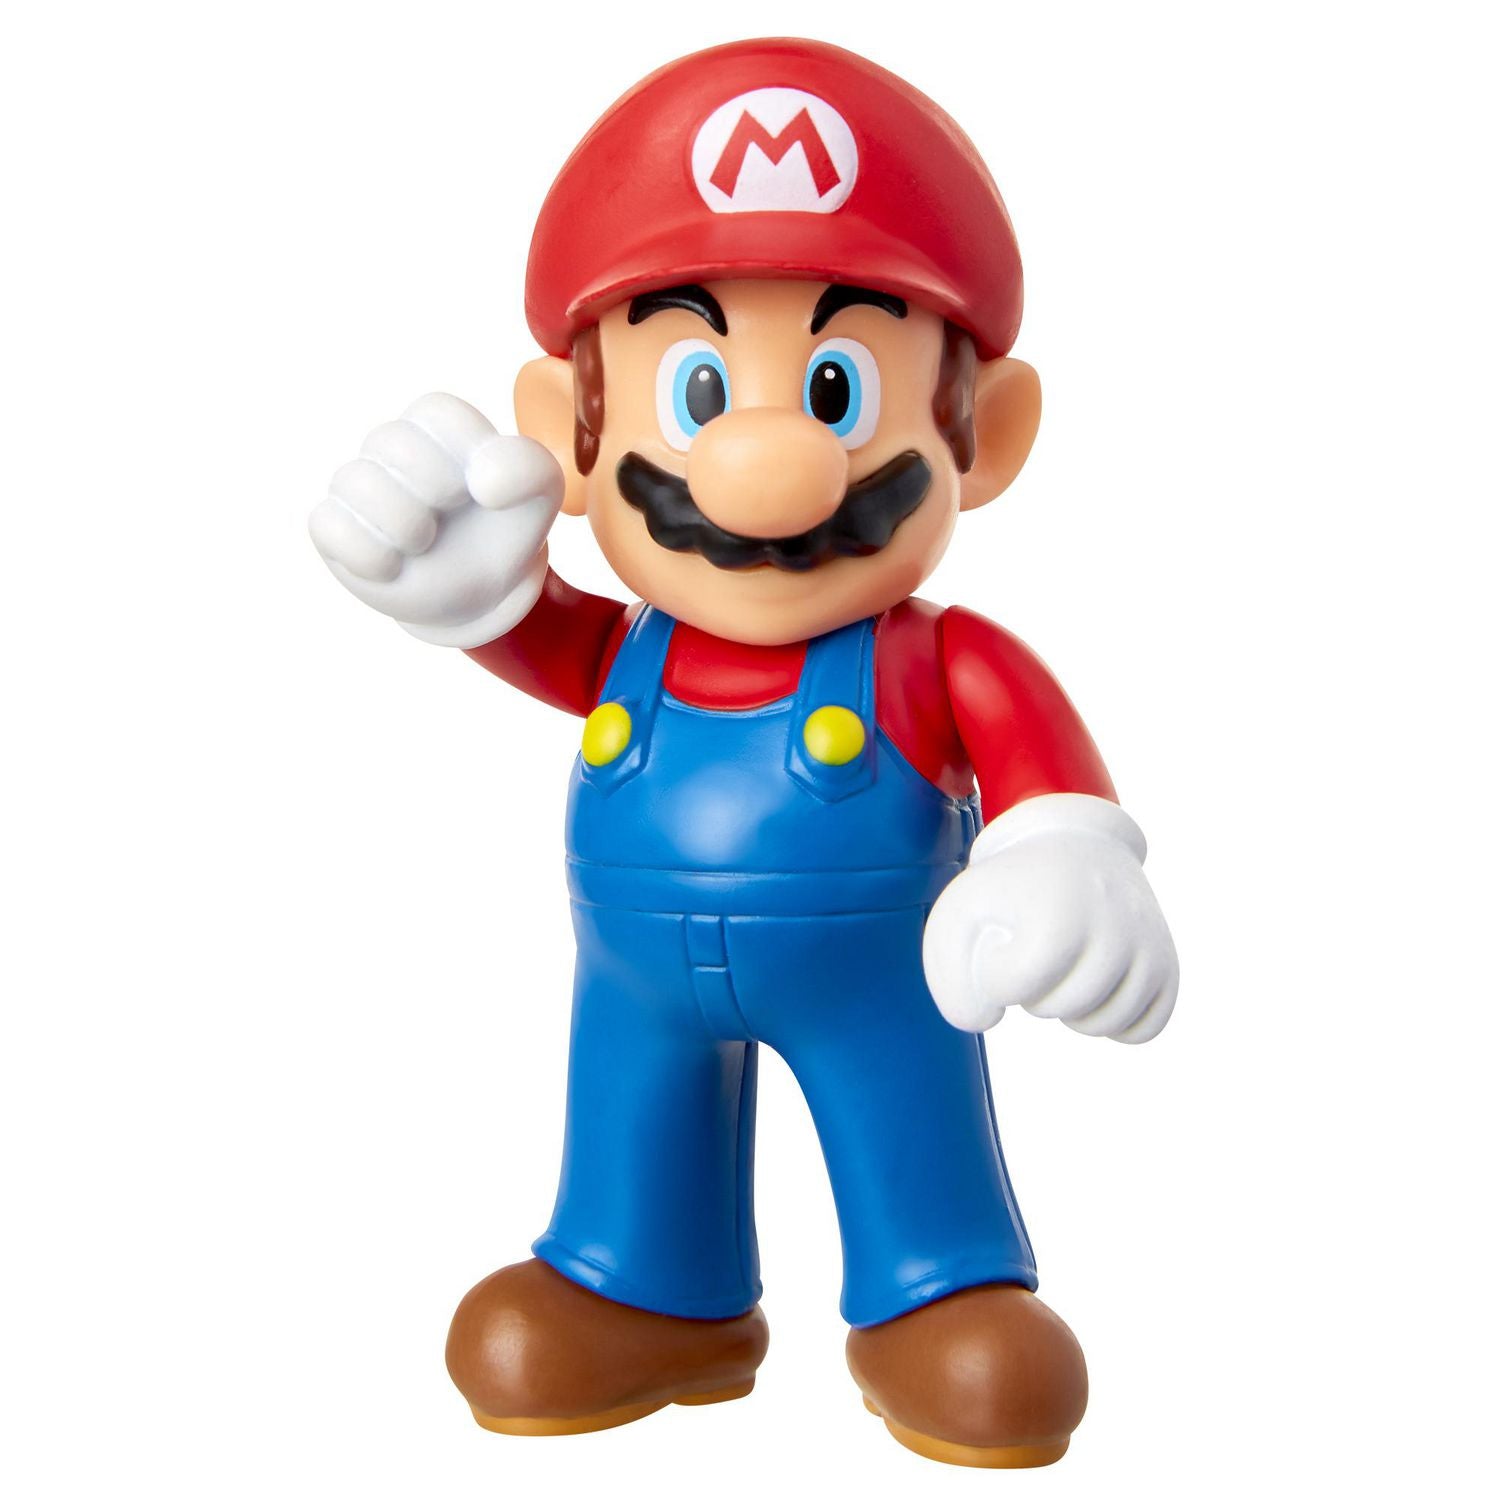 Super Mario 2&period;5 Inch Figure - Mario